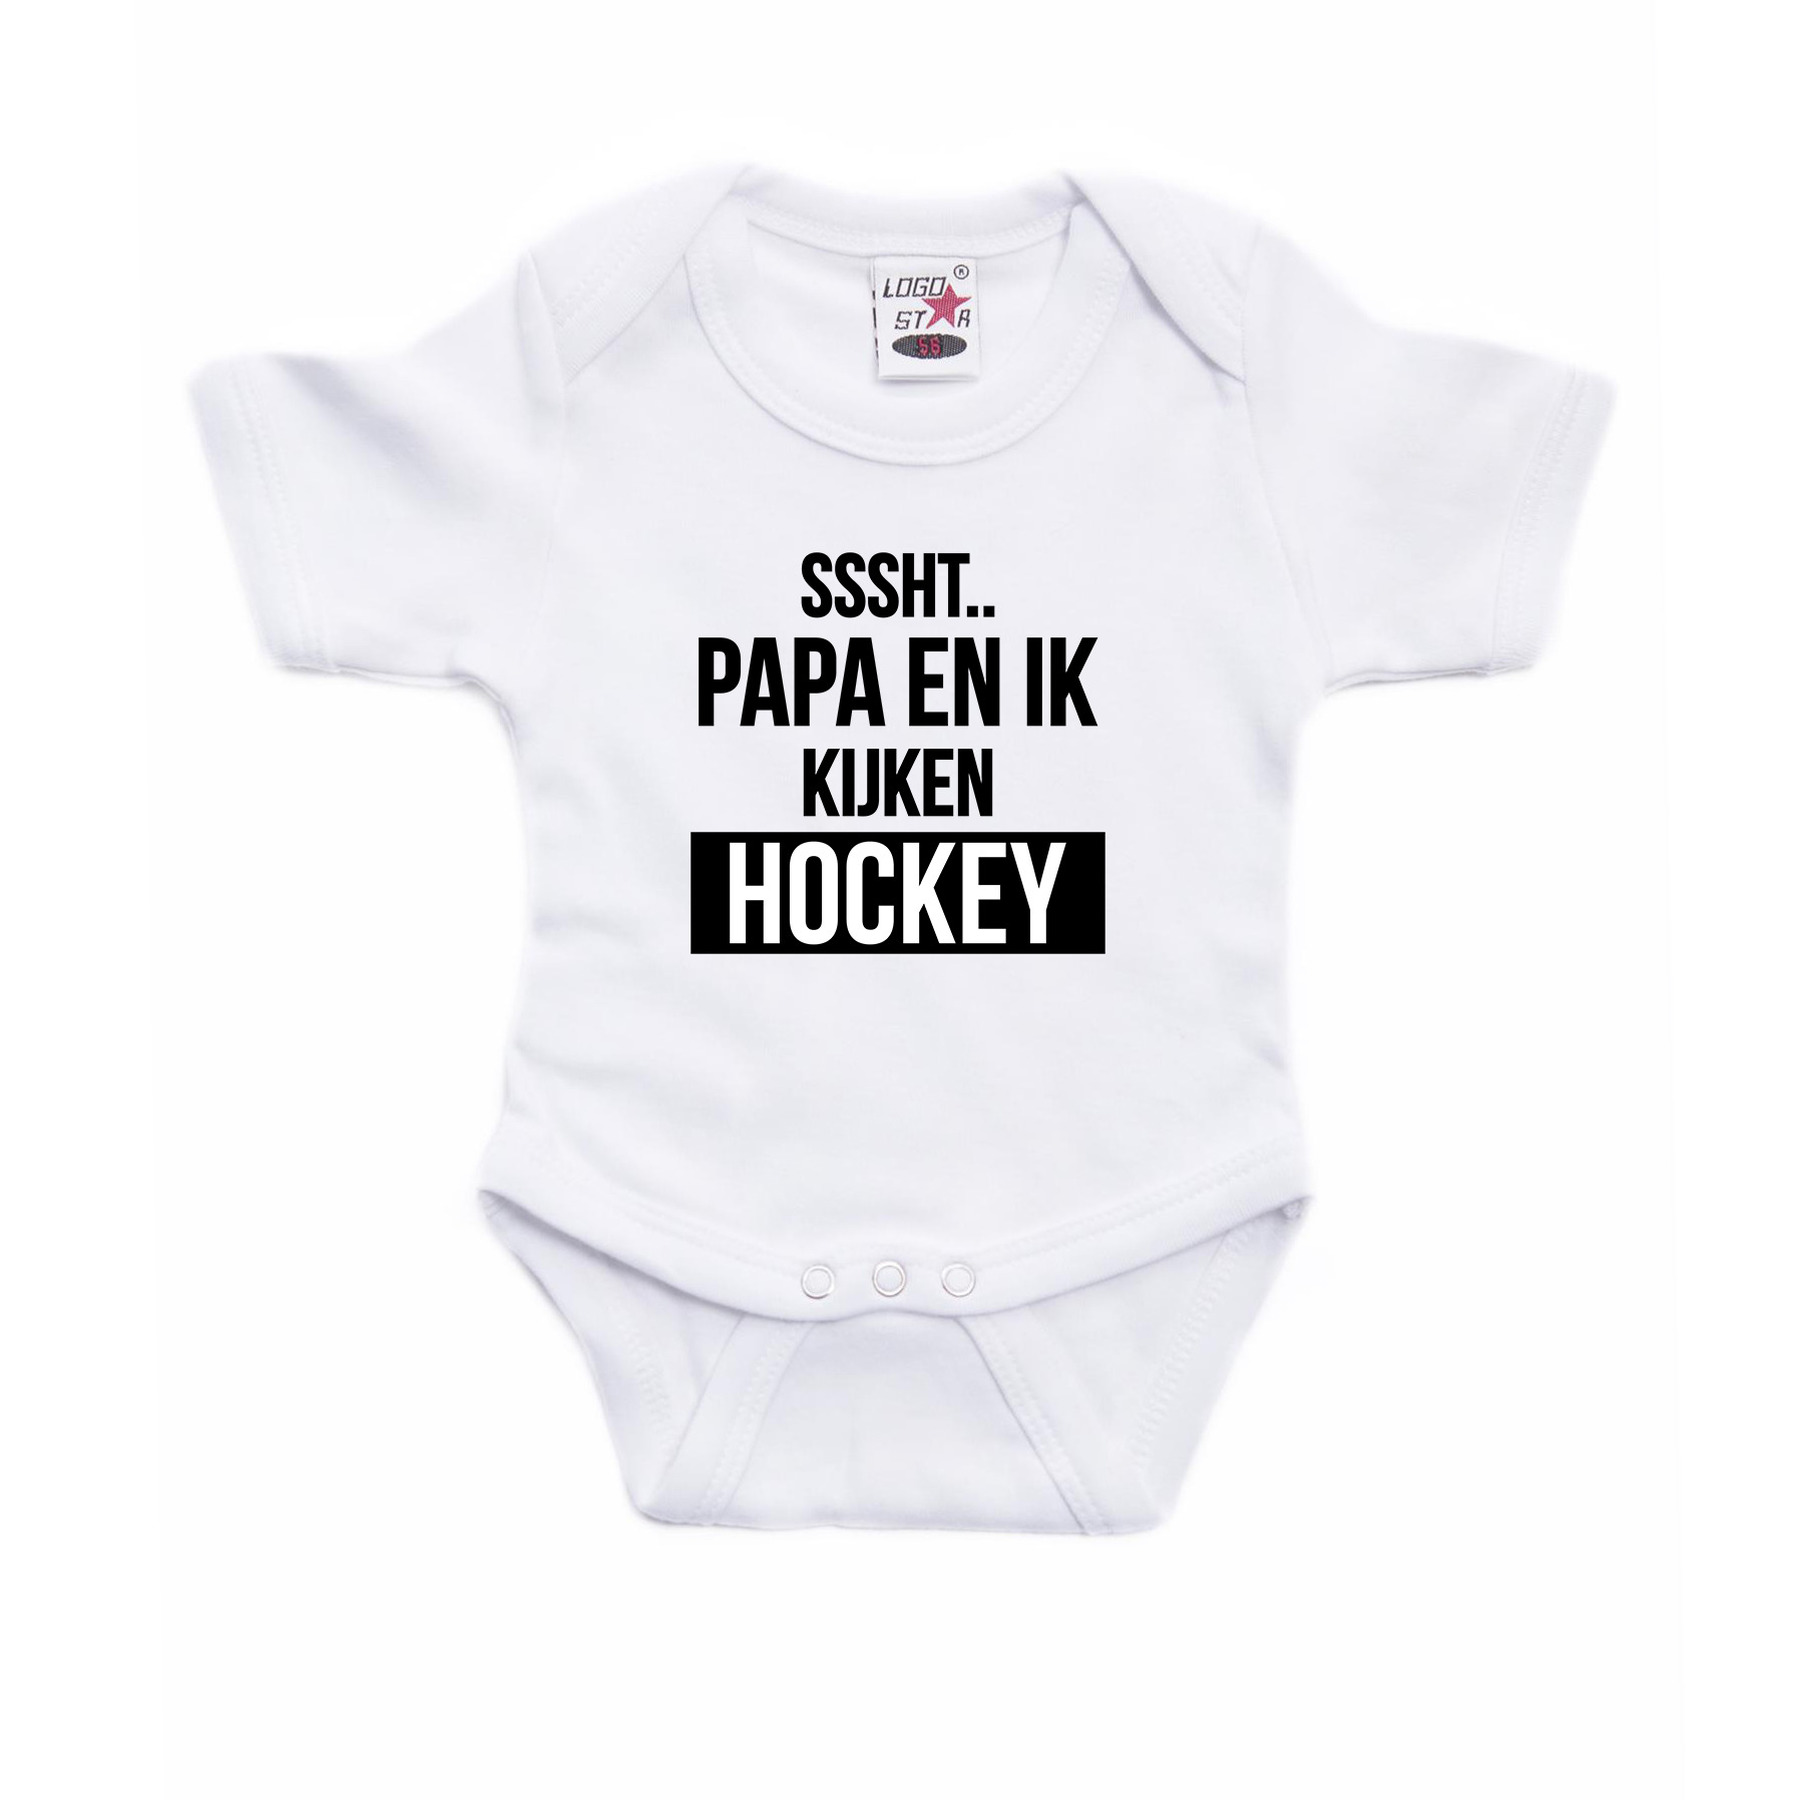 Sssht kijken hockey verkleed-cadeau baby rompertje wit jongens-meisjes EK-WK supporter